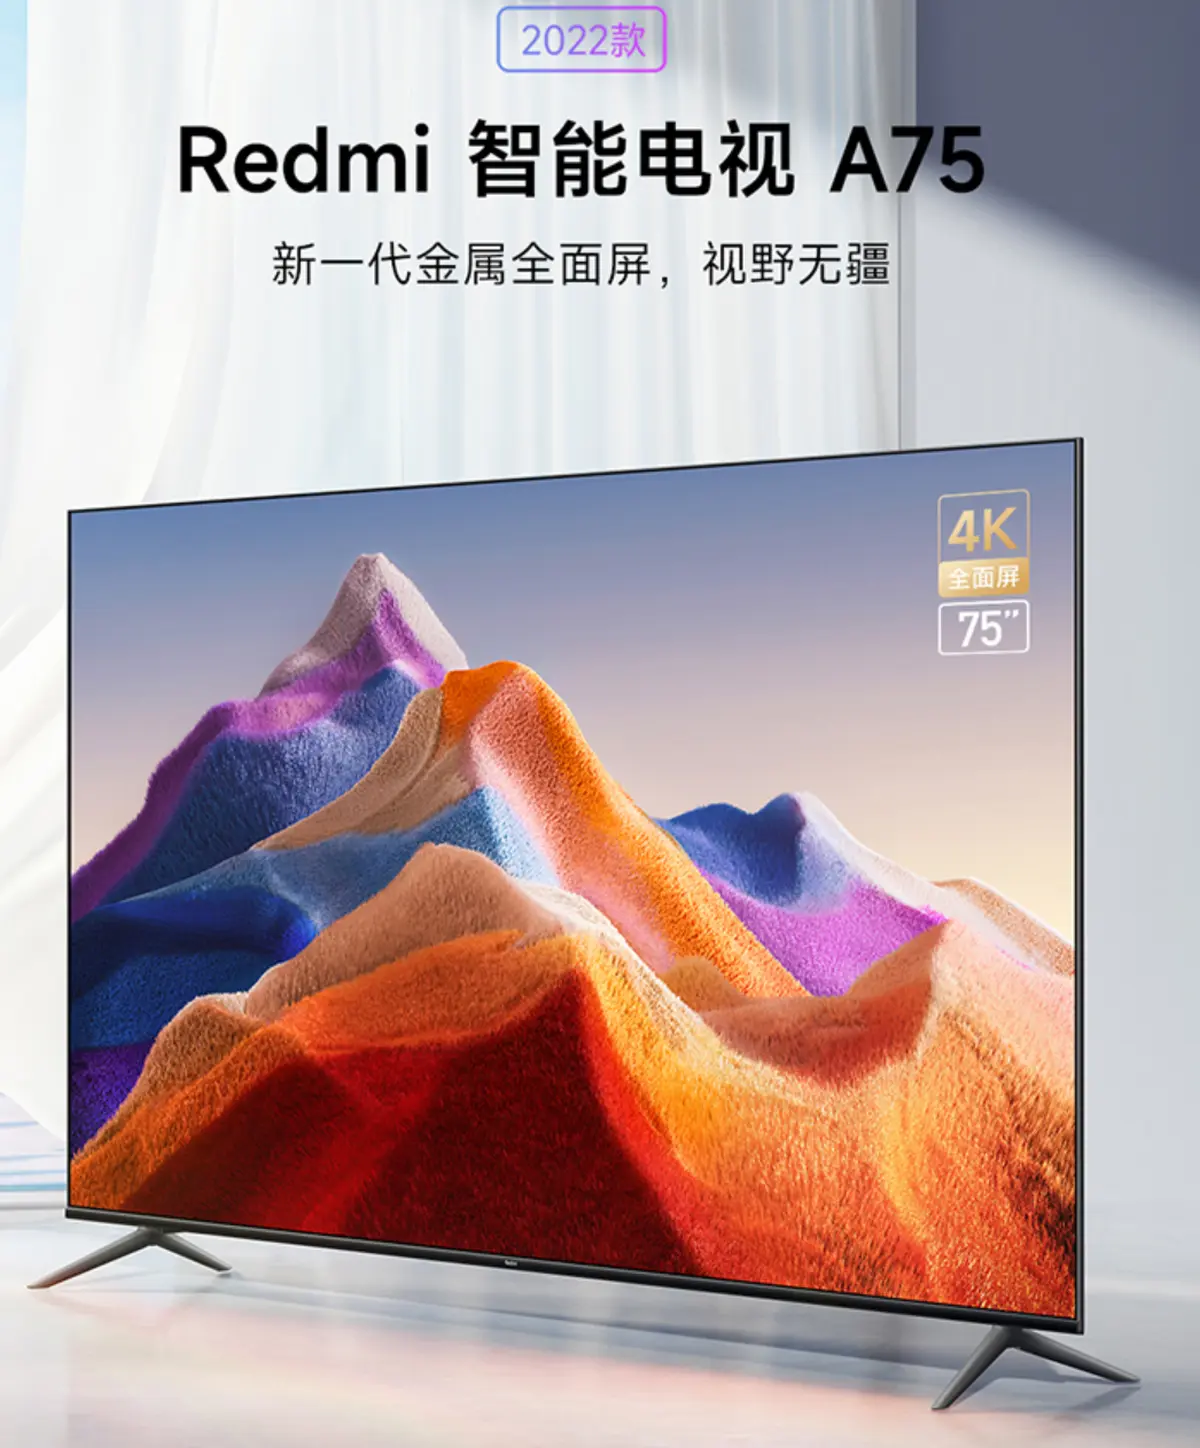 Redmi Smart TV A75 3